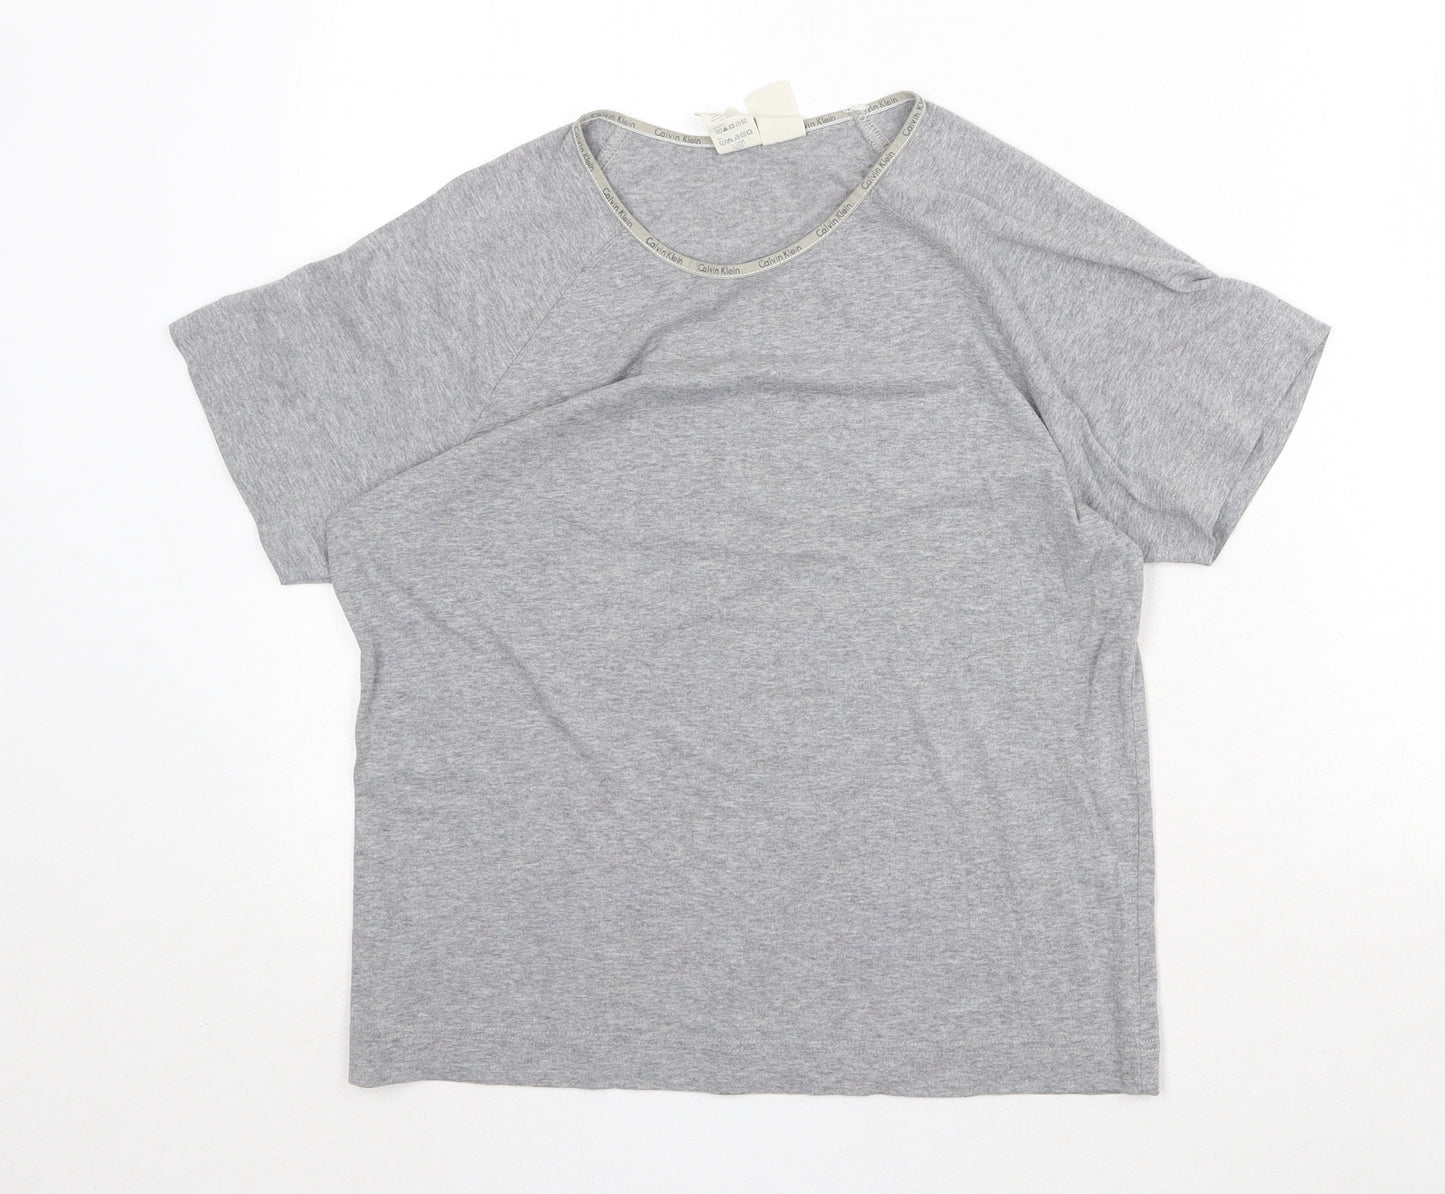 Calvin Klein Womens Grey Cotton Basic T-Shirt Size S Crew Neck